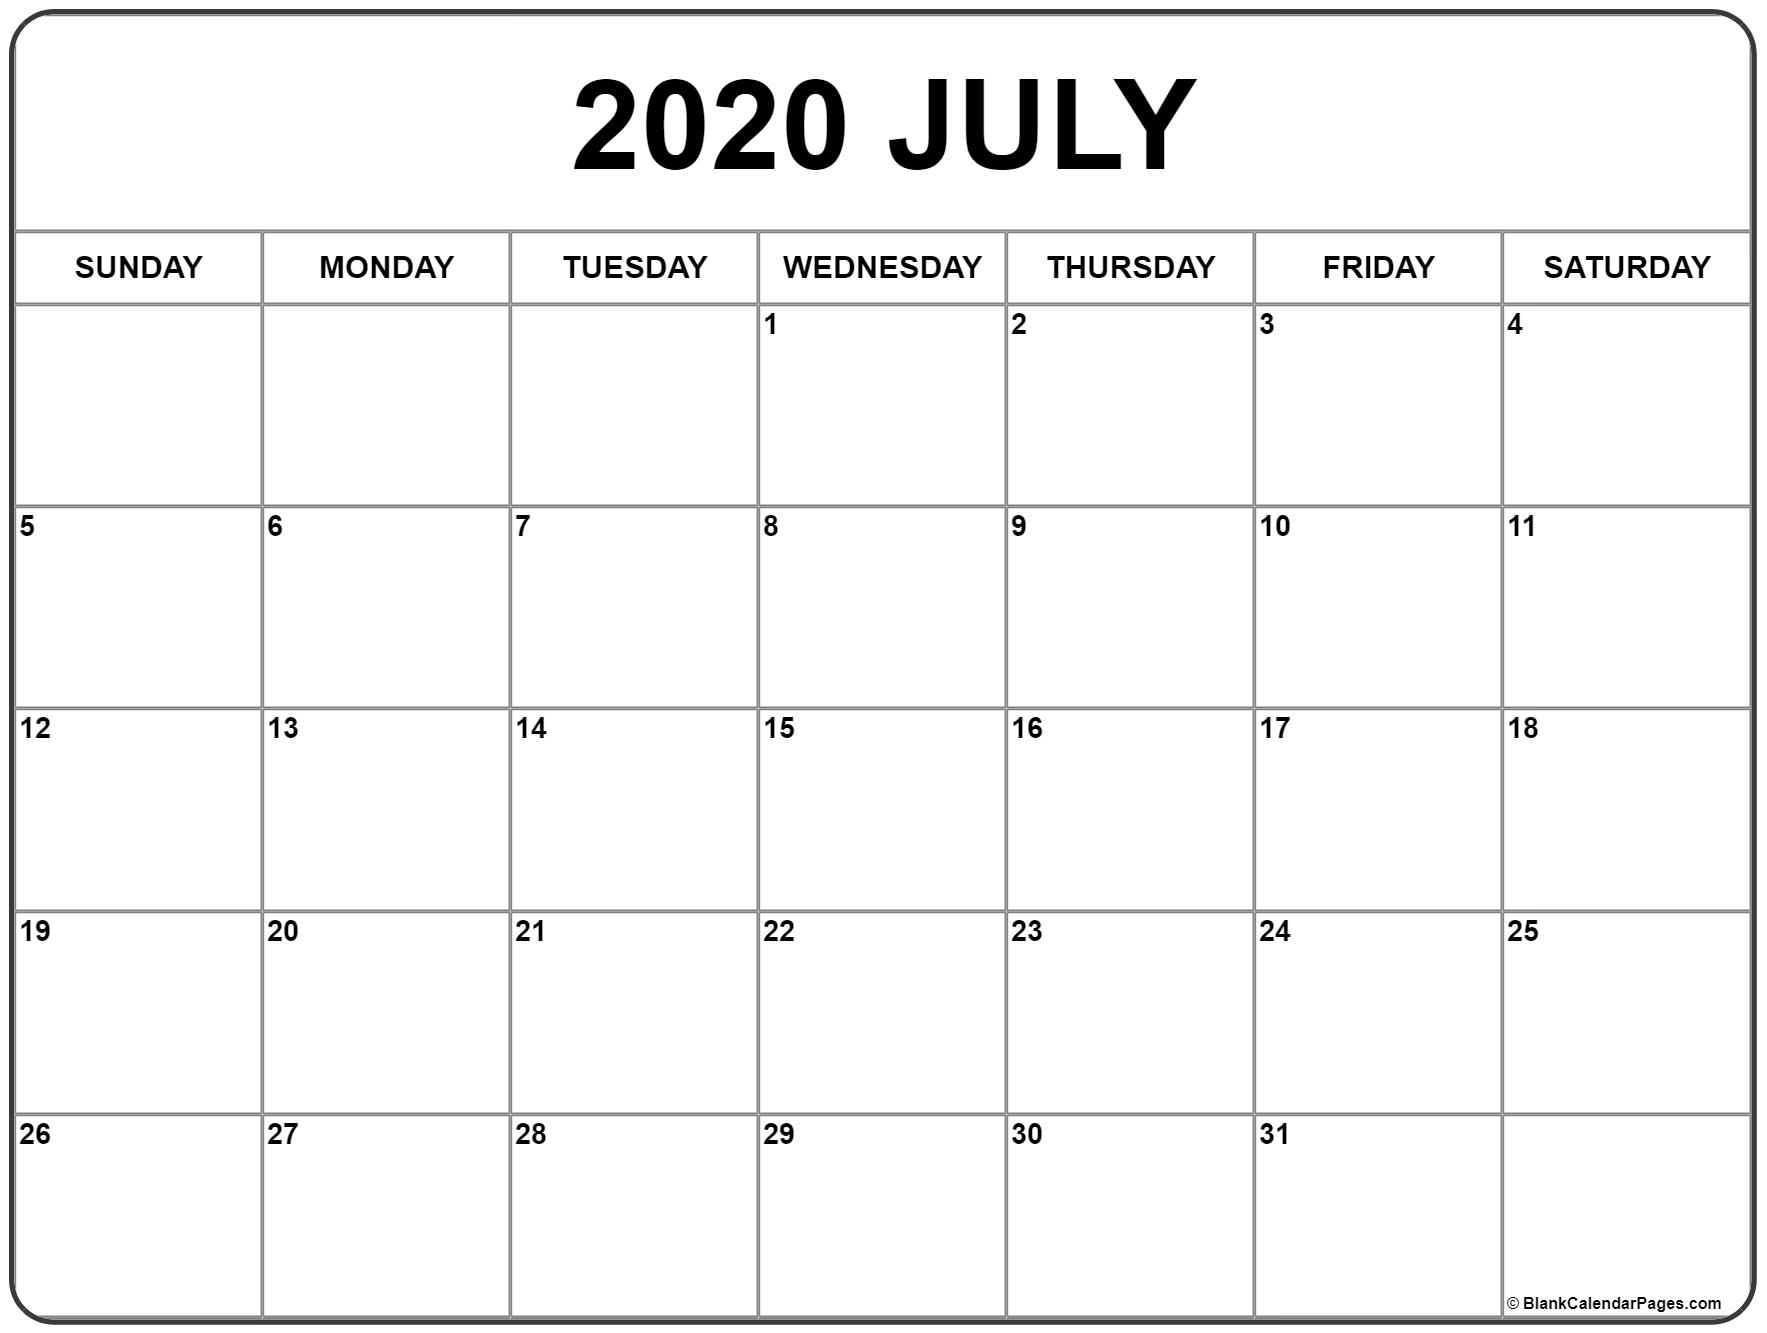 July 2020 Calendar | Free Printable Monthly Calendars